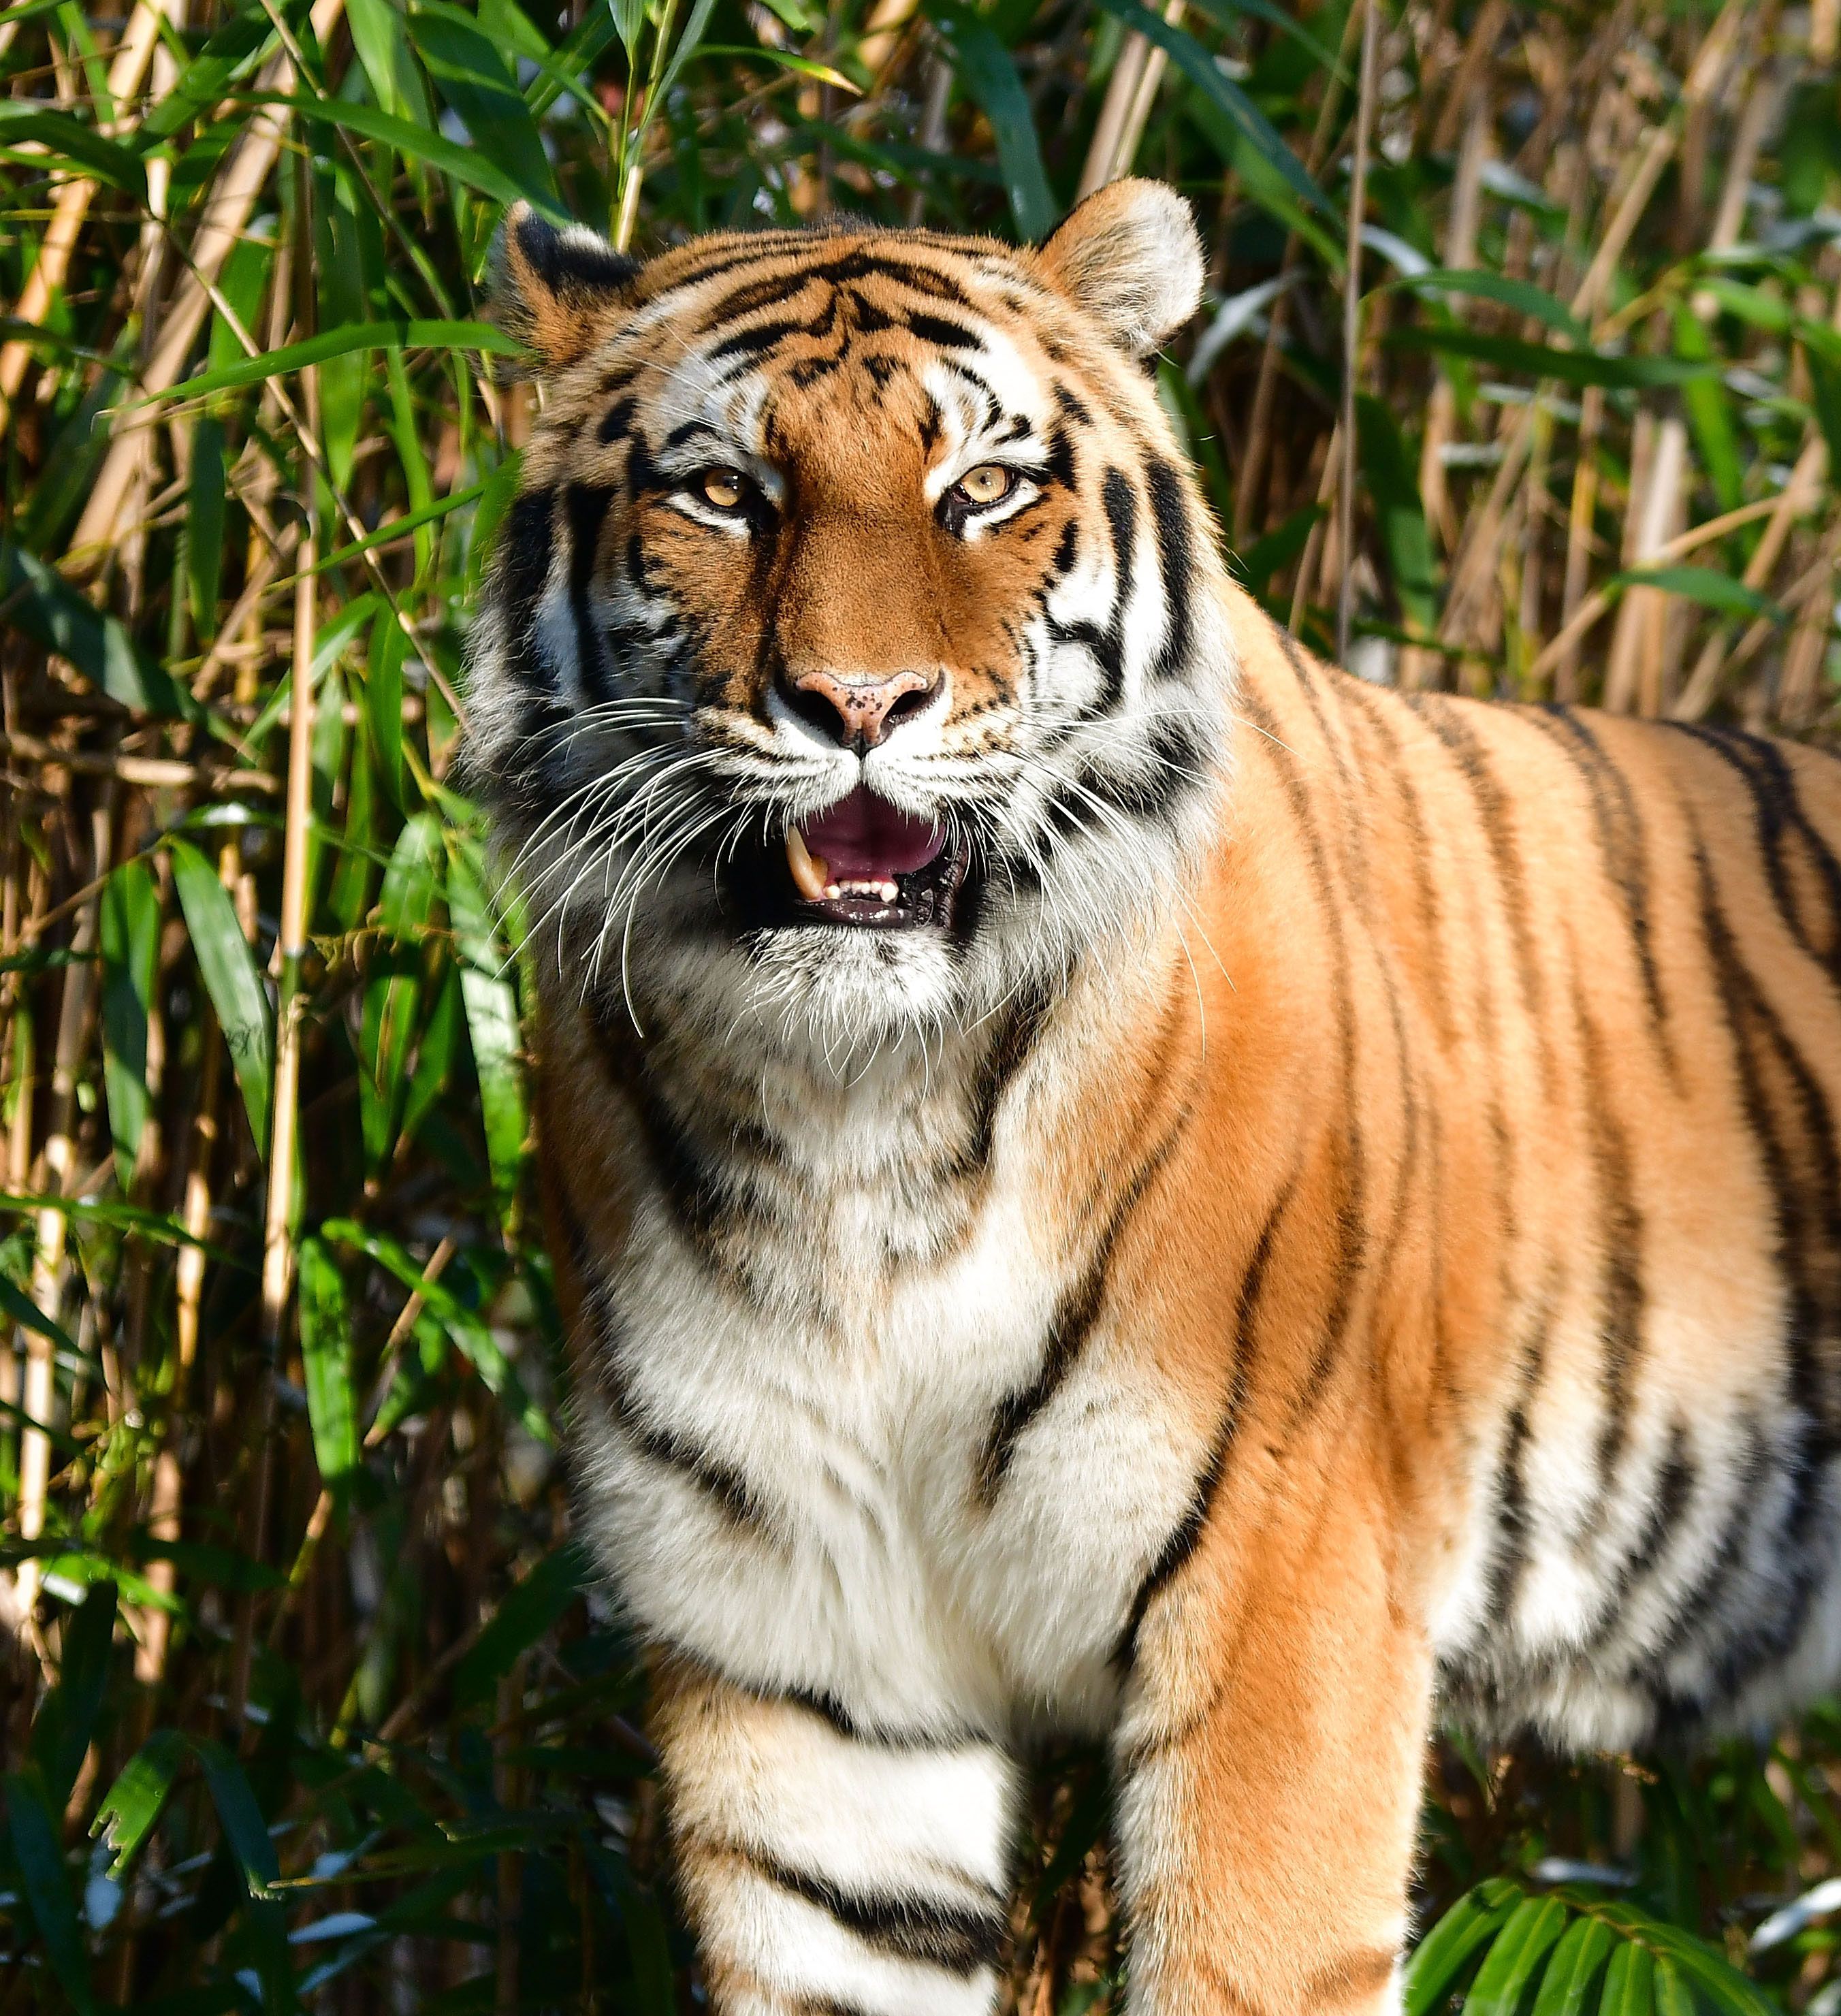 Tiger at NYC zoo tests positive for coronavirus